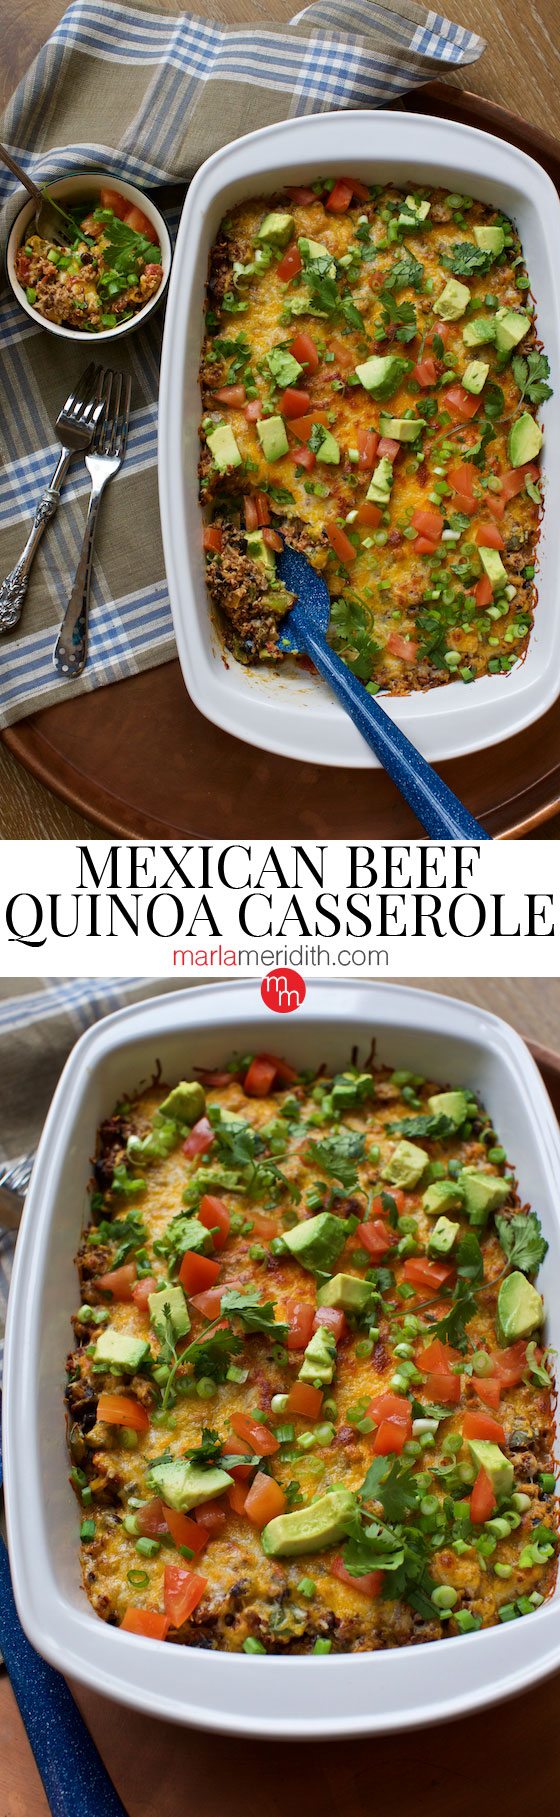 Mexican Beef Quinoa Casserole, a quick, healthy & delicious family recipe! MarlaMeridith.com ( @marlameridith )